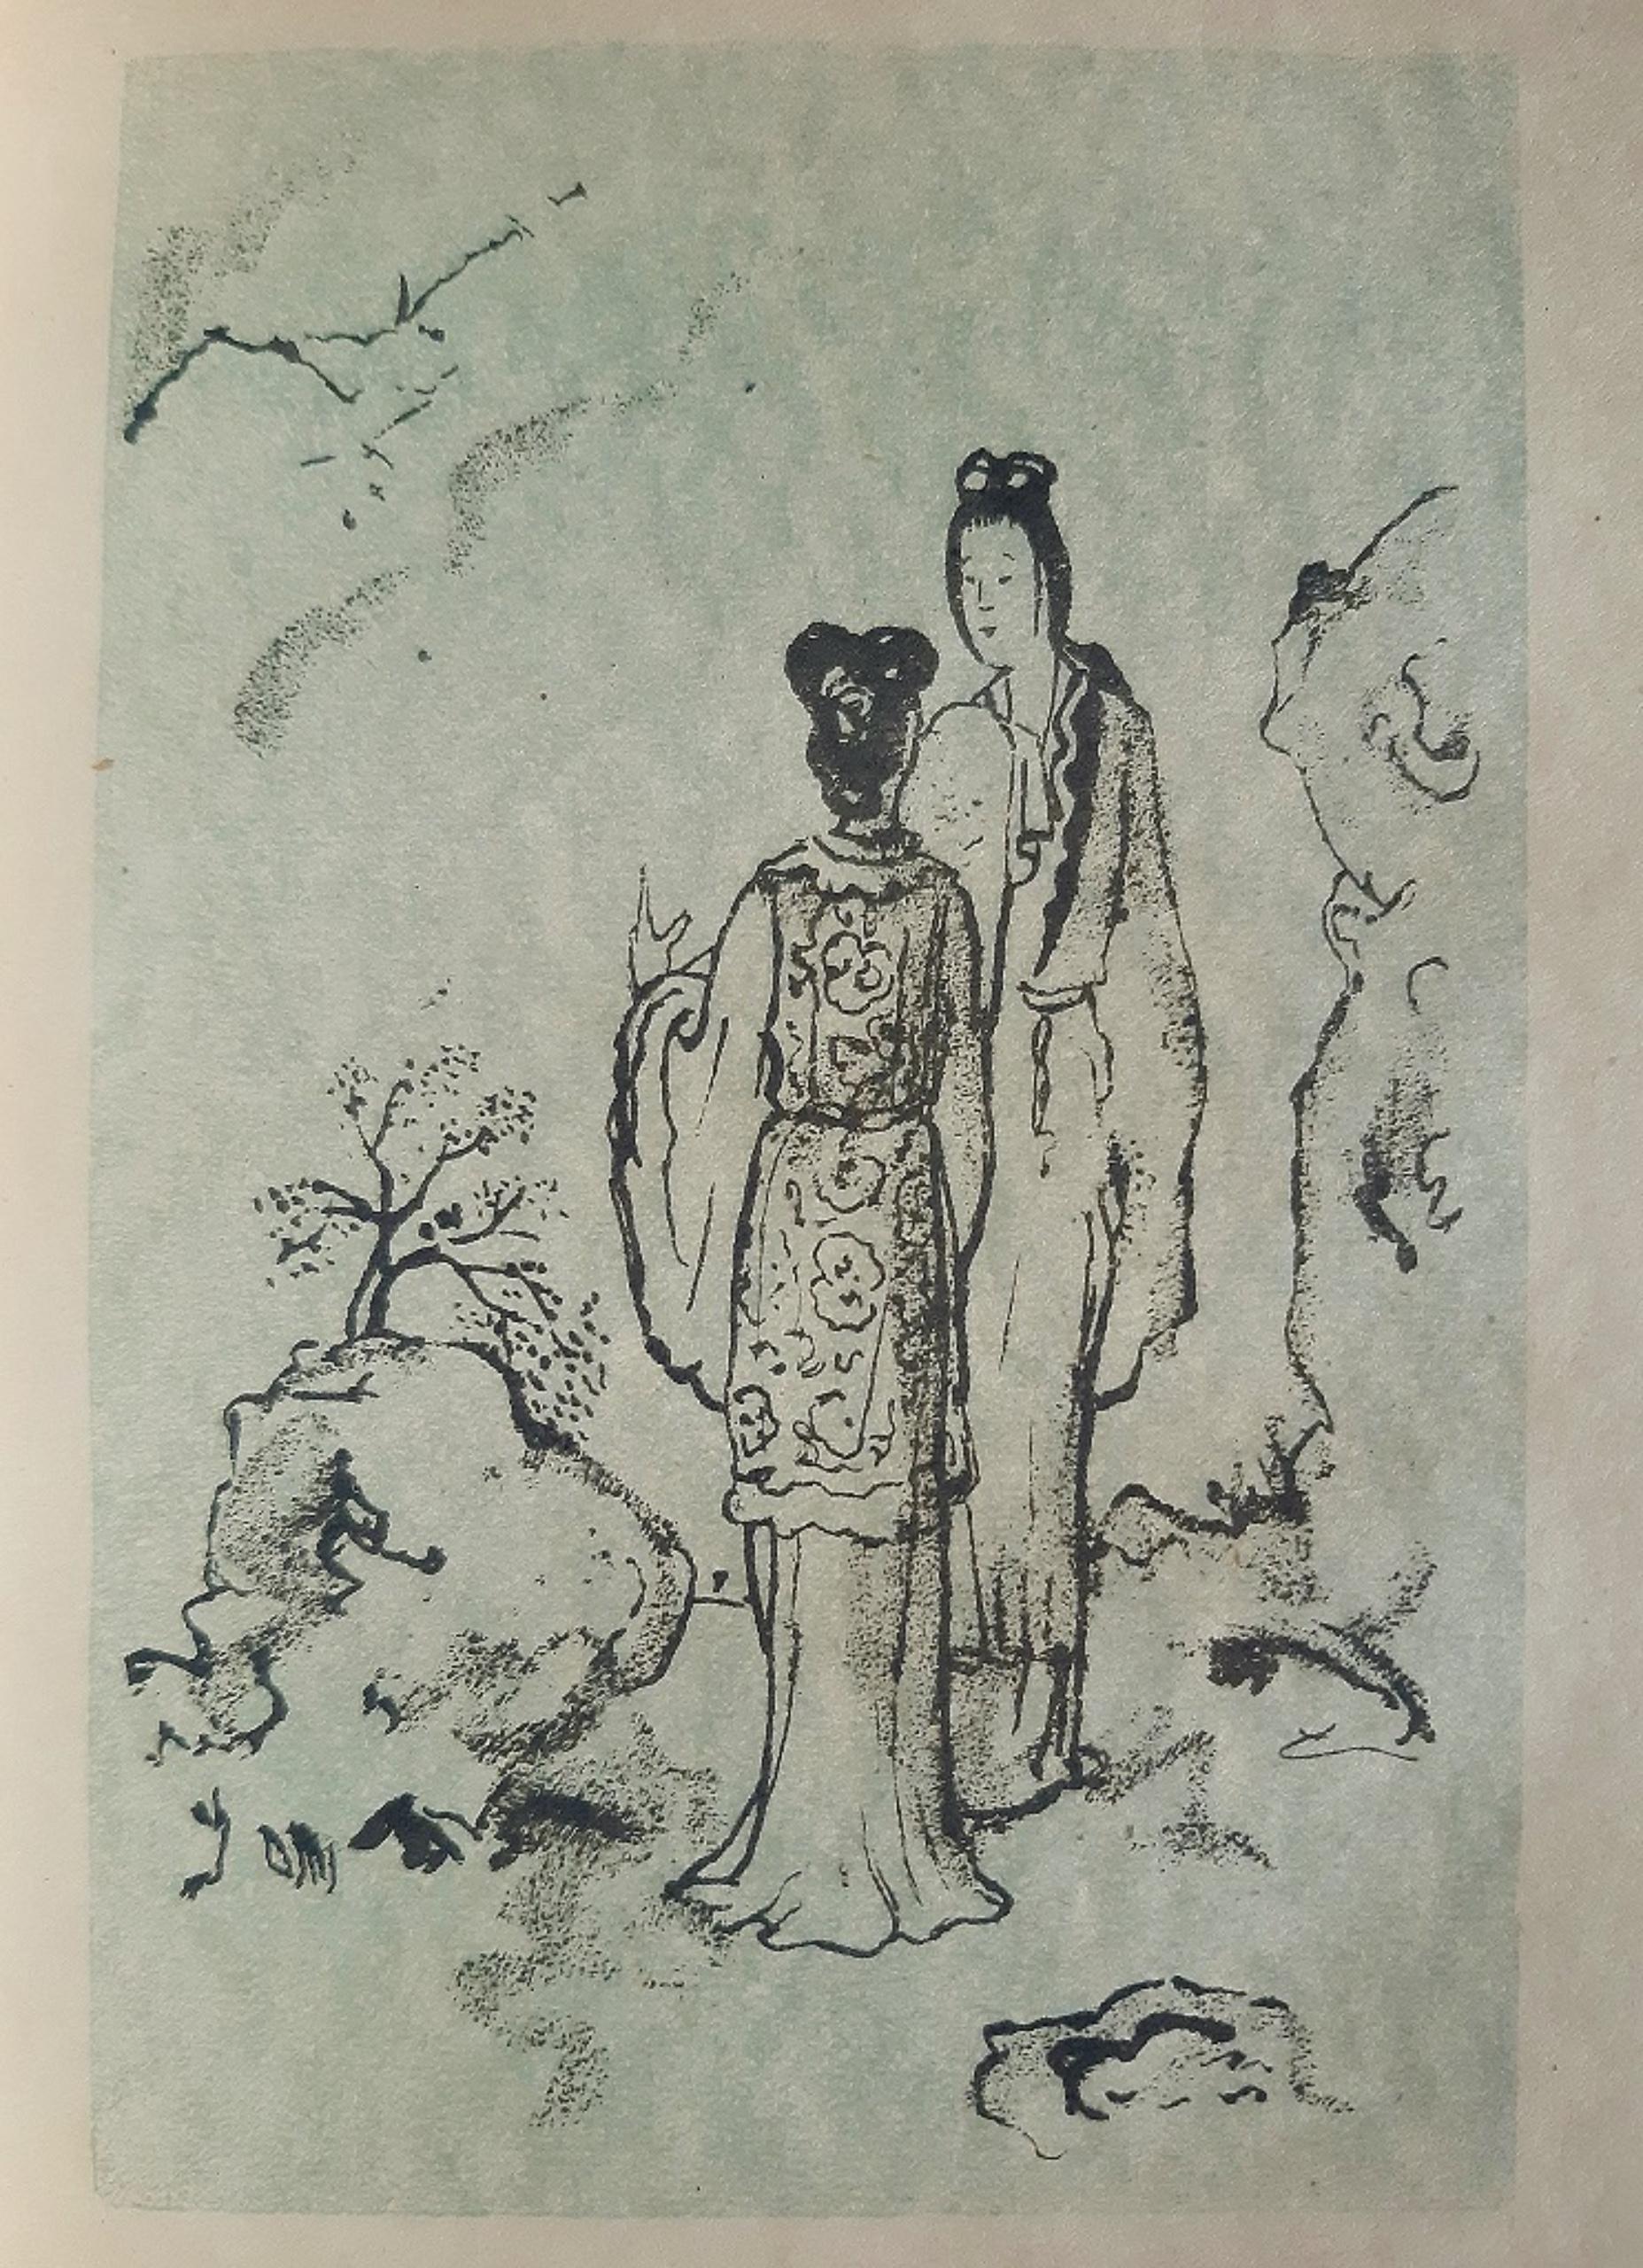 Chinesische Abende - Vintage Rare Book Illustrated by Emil Orlik - 1920 For Sale 5